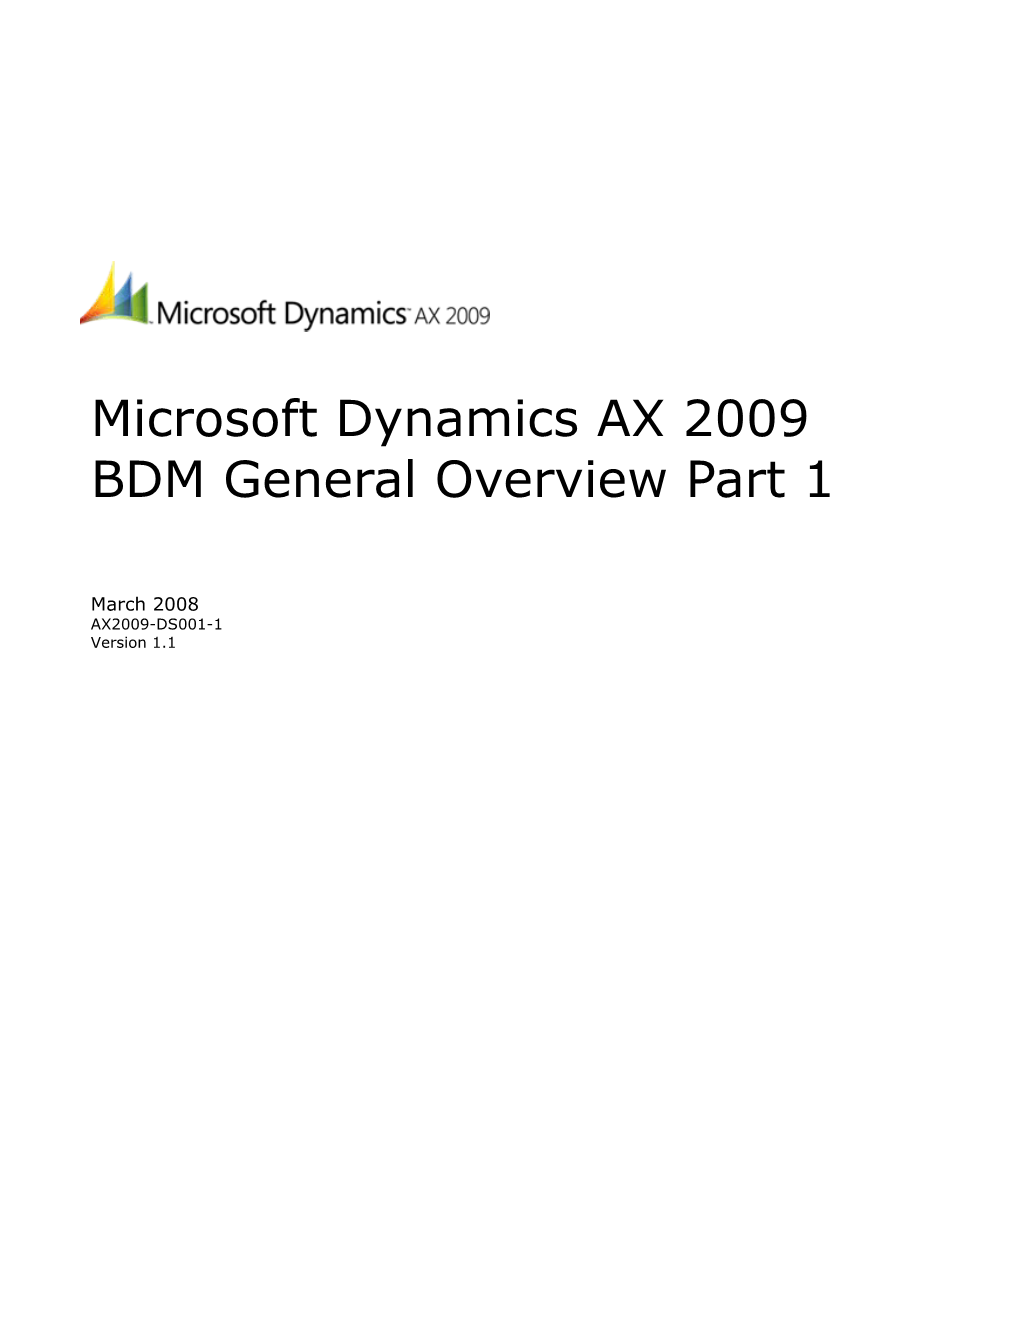 Microsoft Dynamics AX 2009 BDM Overview Demo Part 1